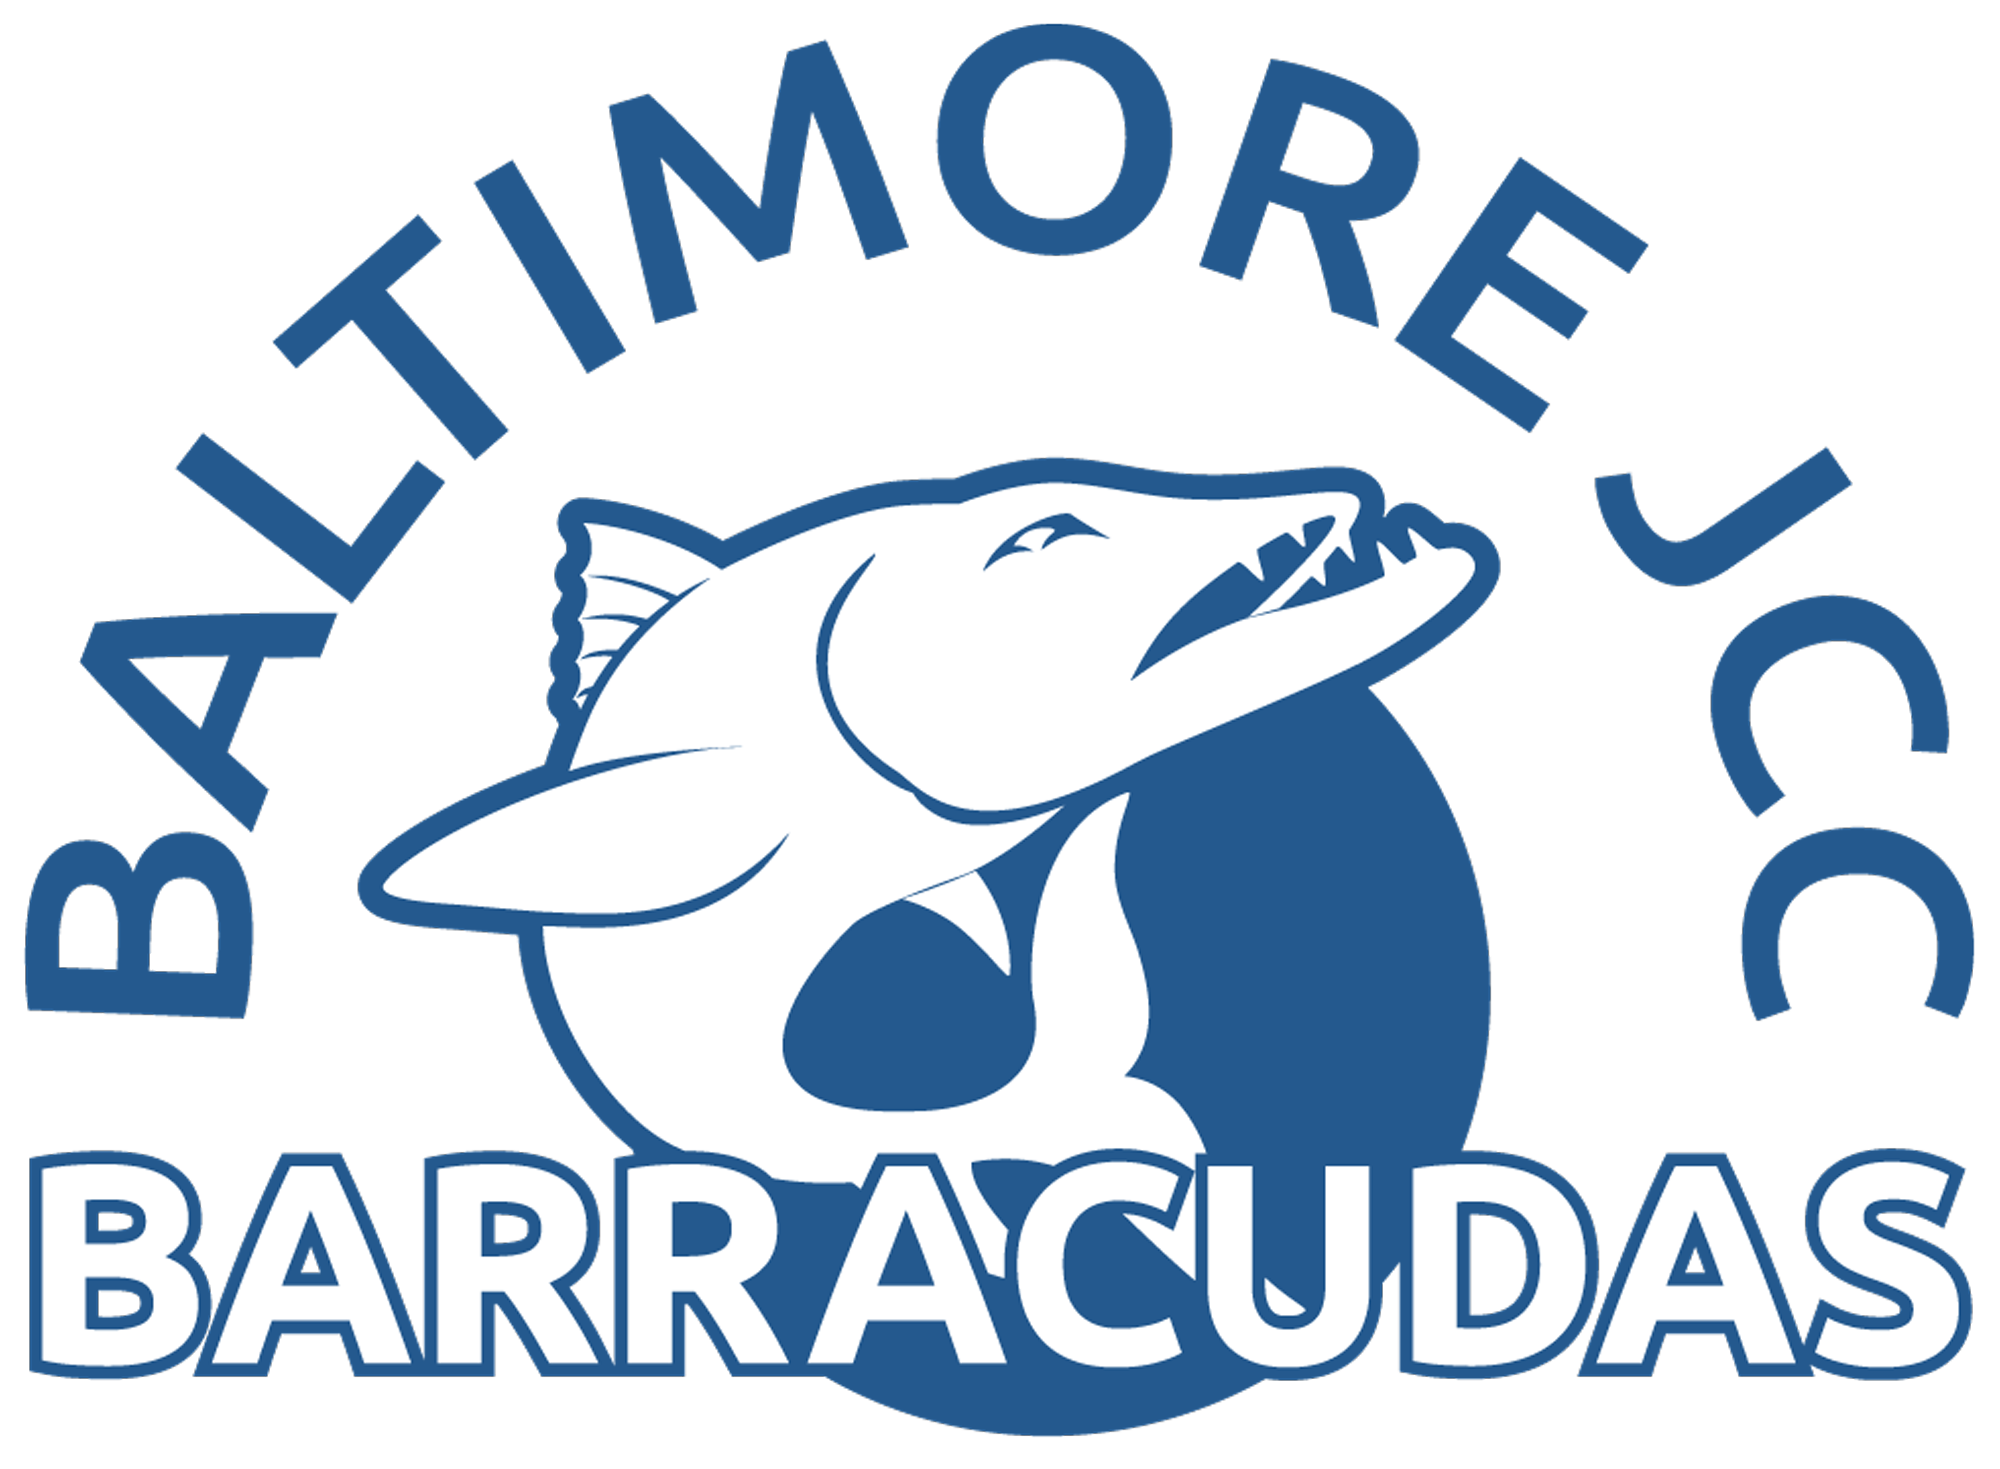 Baltimore JCC Barracudas